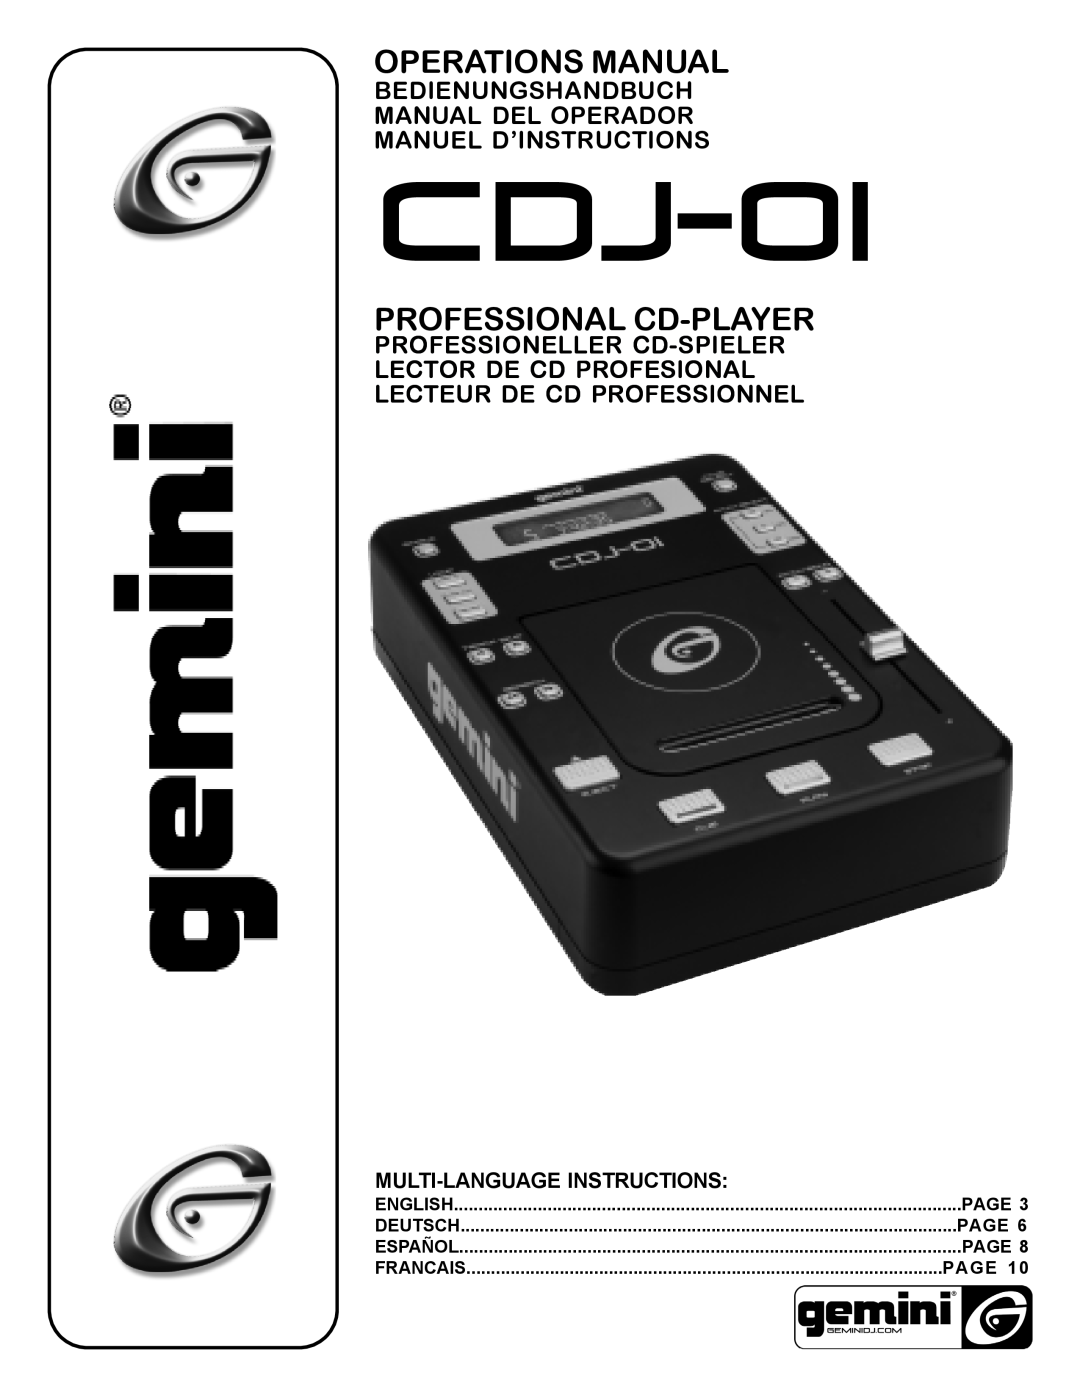 Gemini CDJ-01 manual Multi-Languageinstructions, CDJ-0I, Operations Manual, Professional Cd-Player, Manuel D’Instructions 